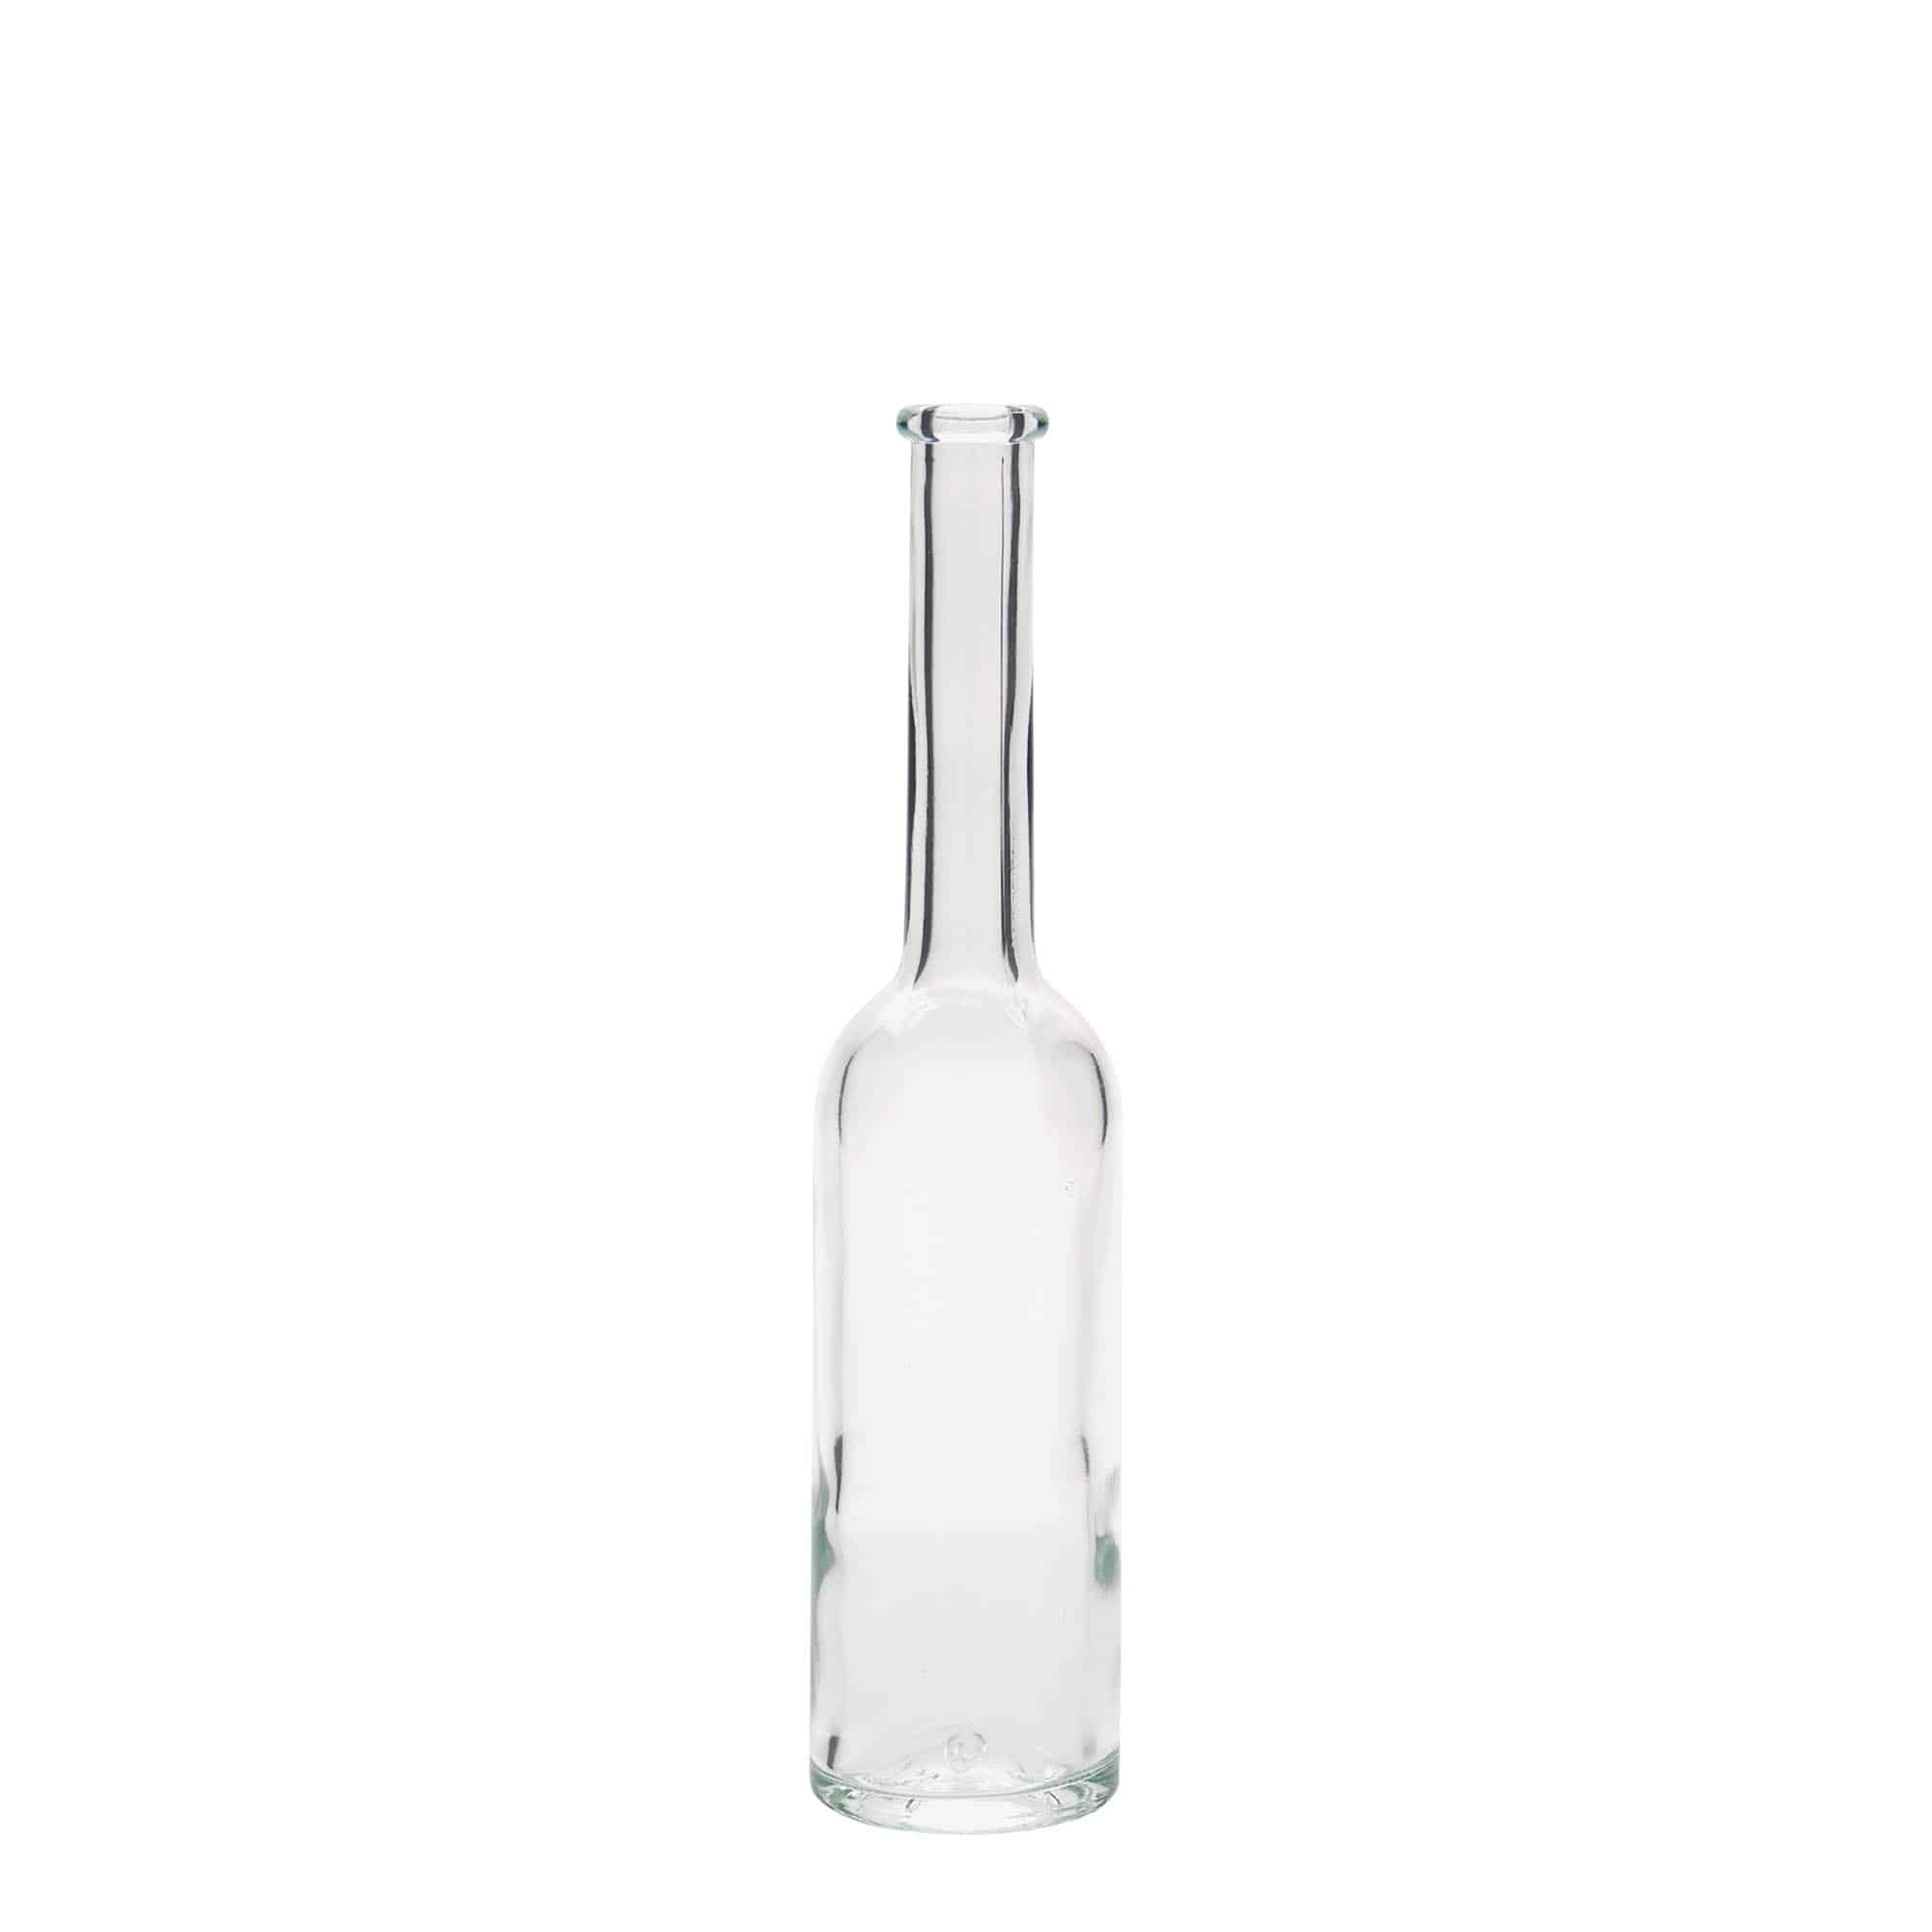 100 ml glass bottle 'Opera', closure: cork